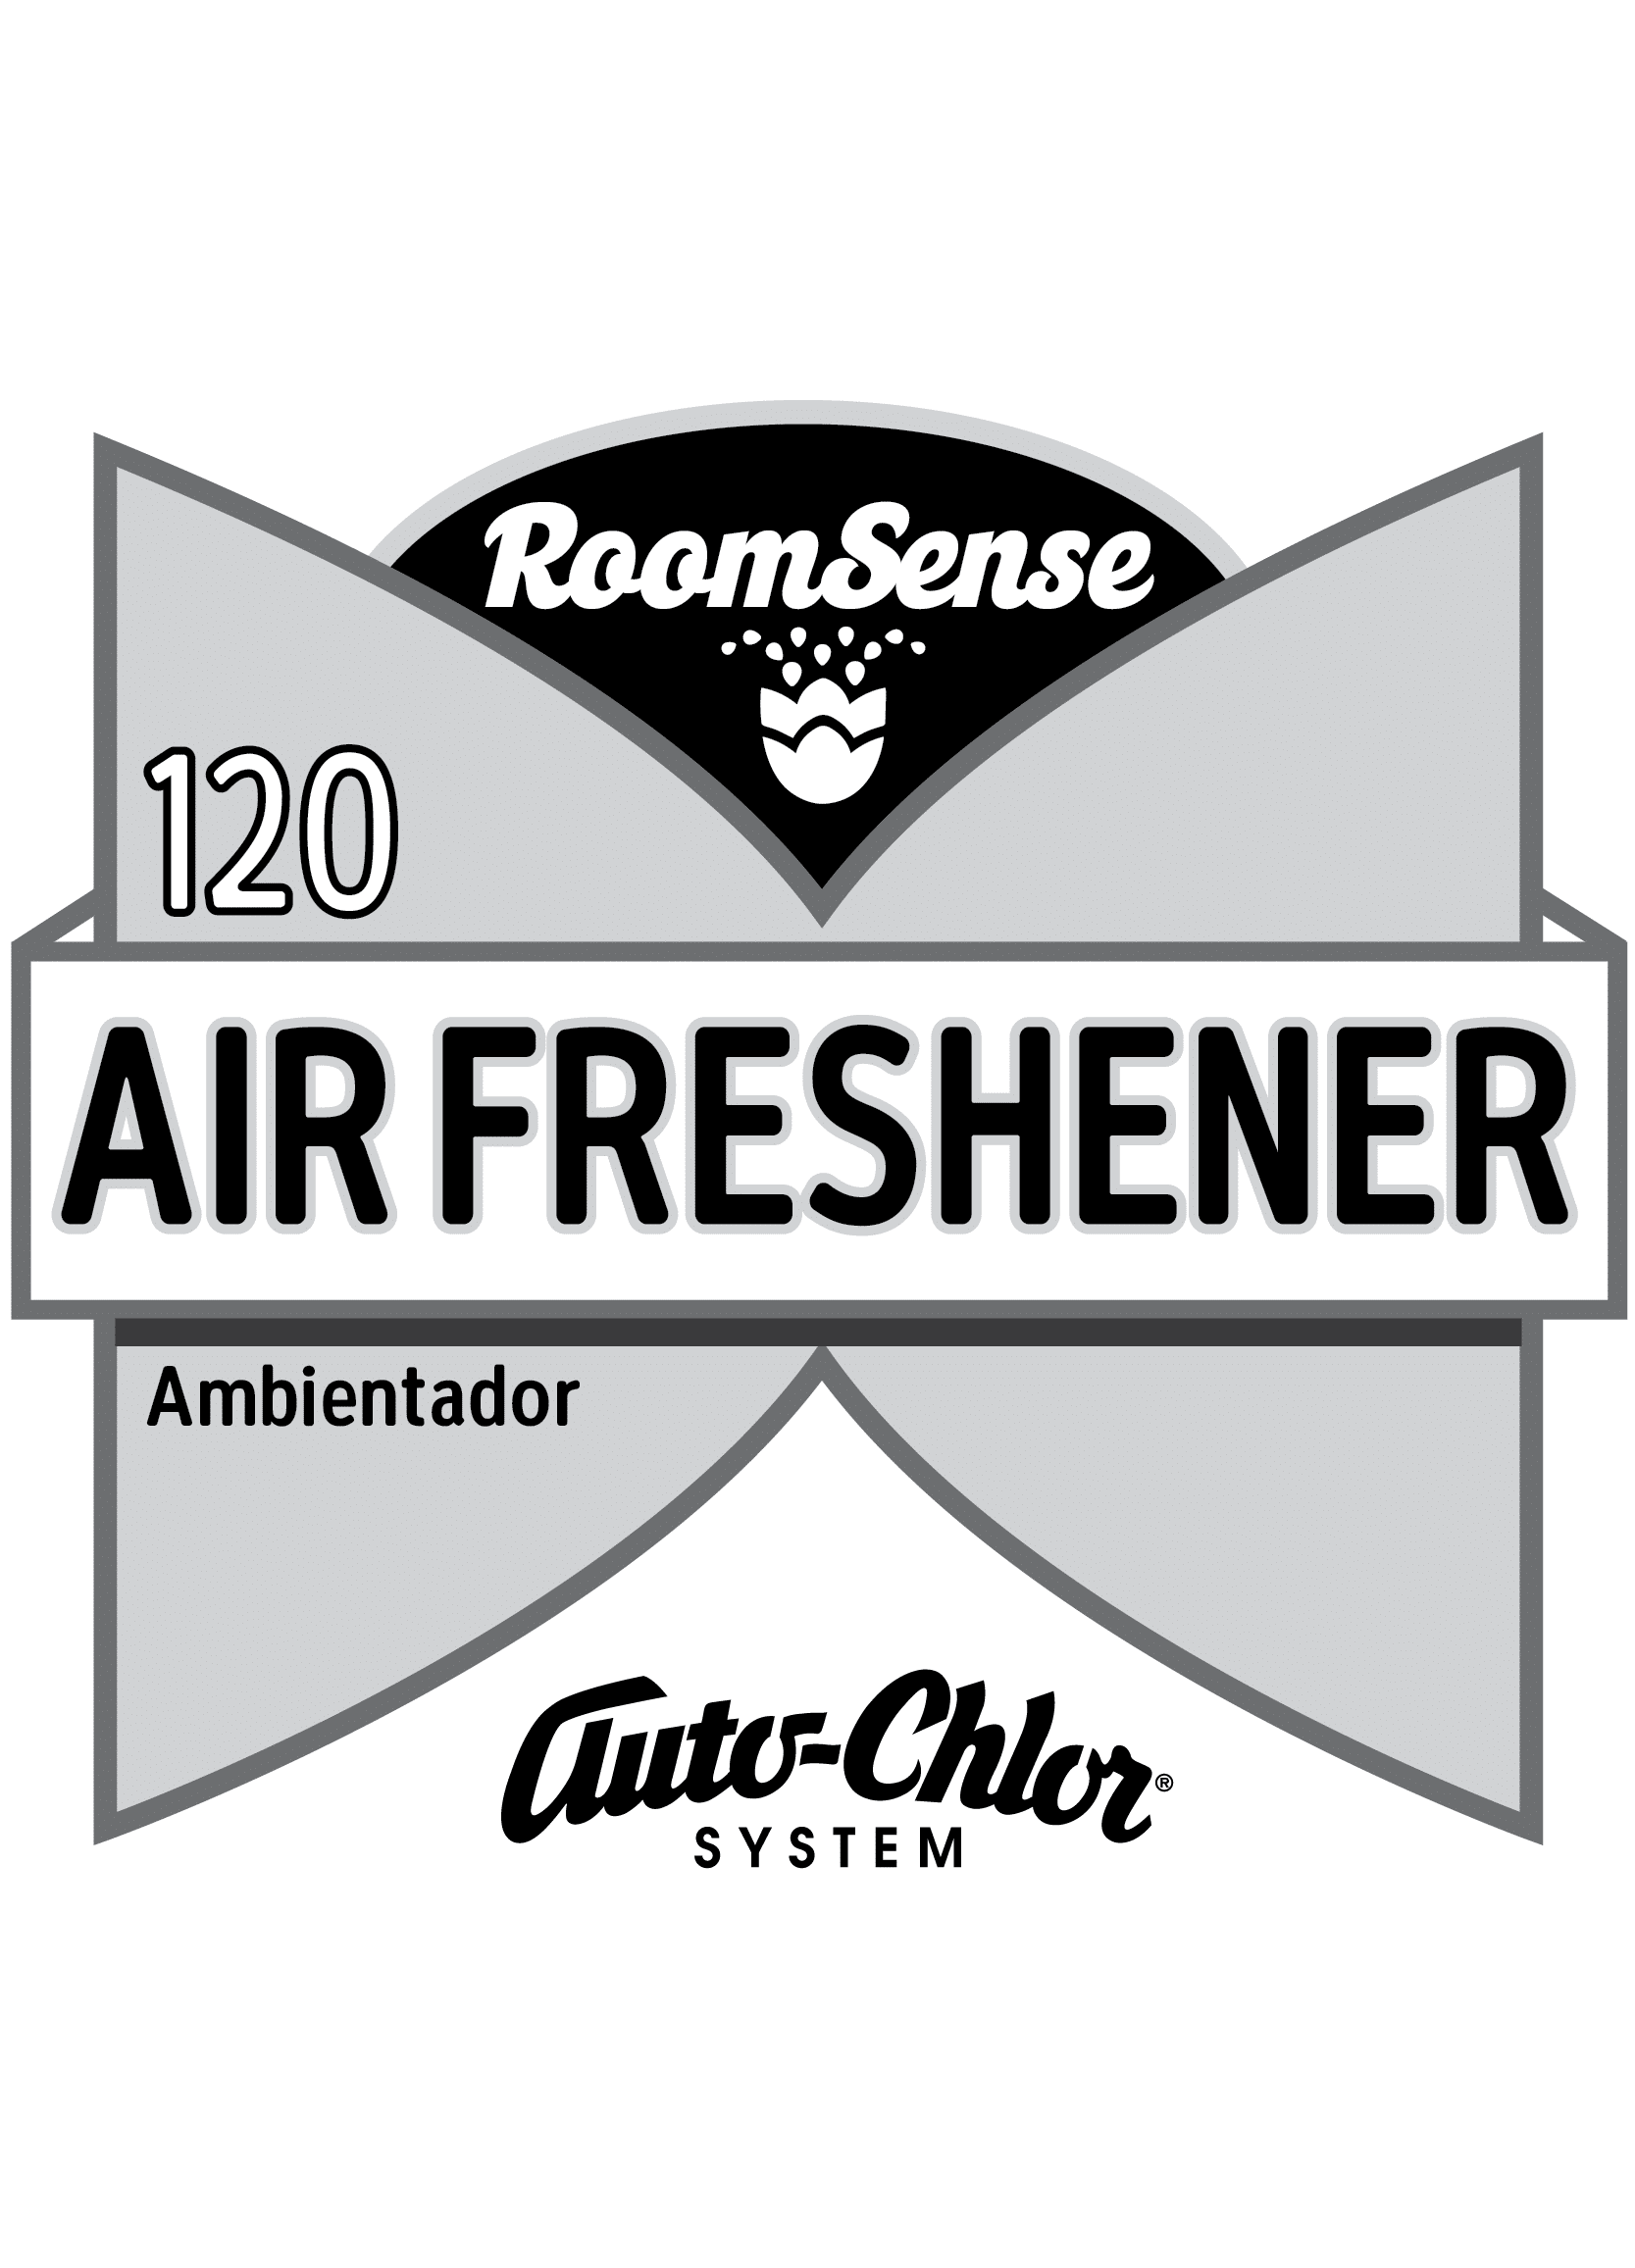 RoomSense-120 Air Freshener